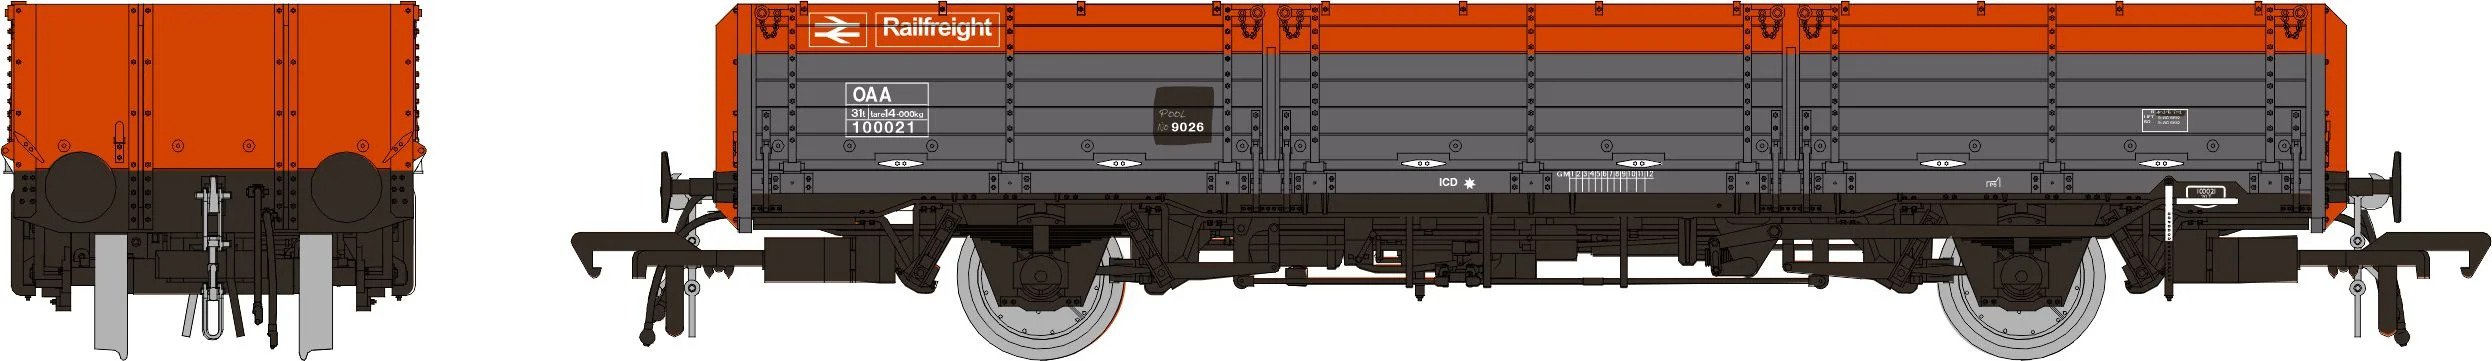 Rapido Trains 915014 OAA No. 100021, Railfreight red/grey